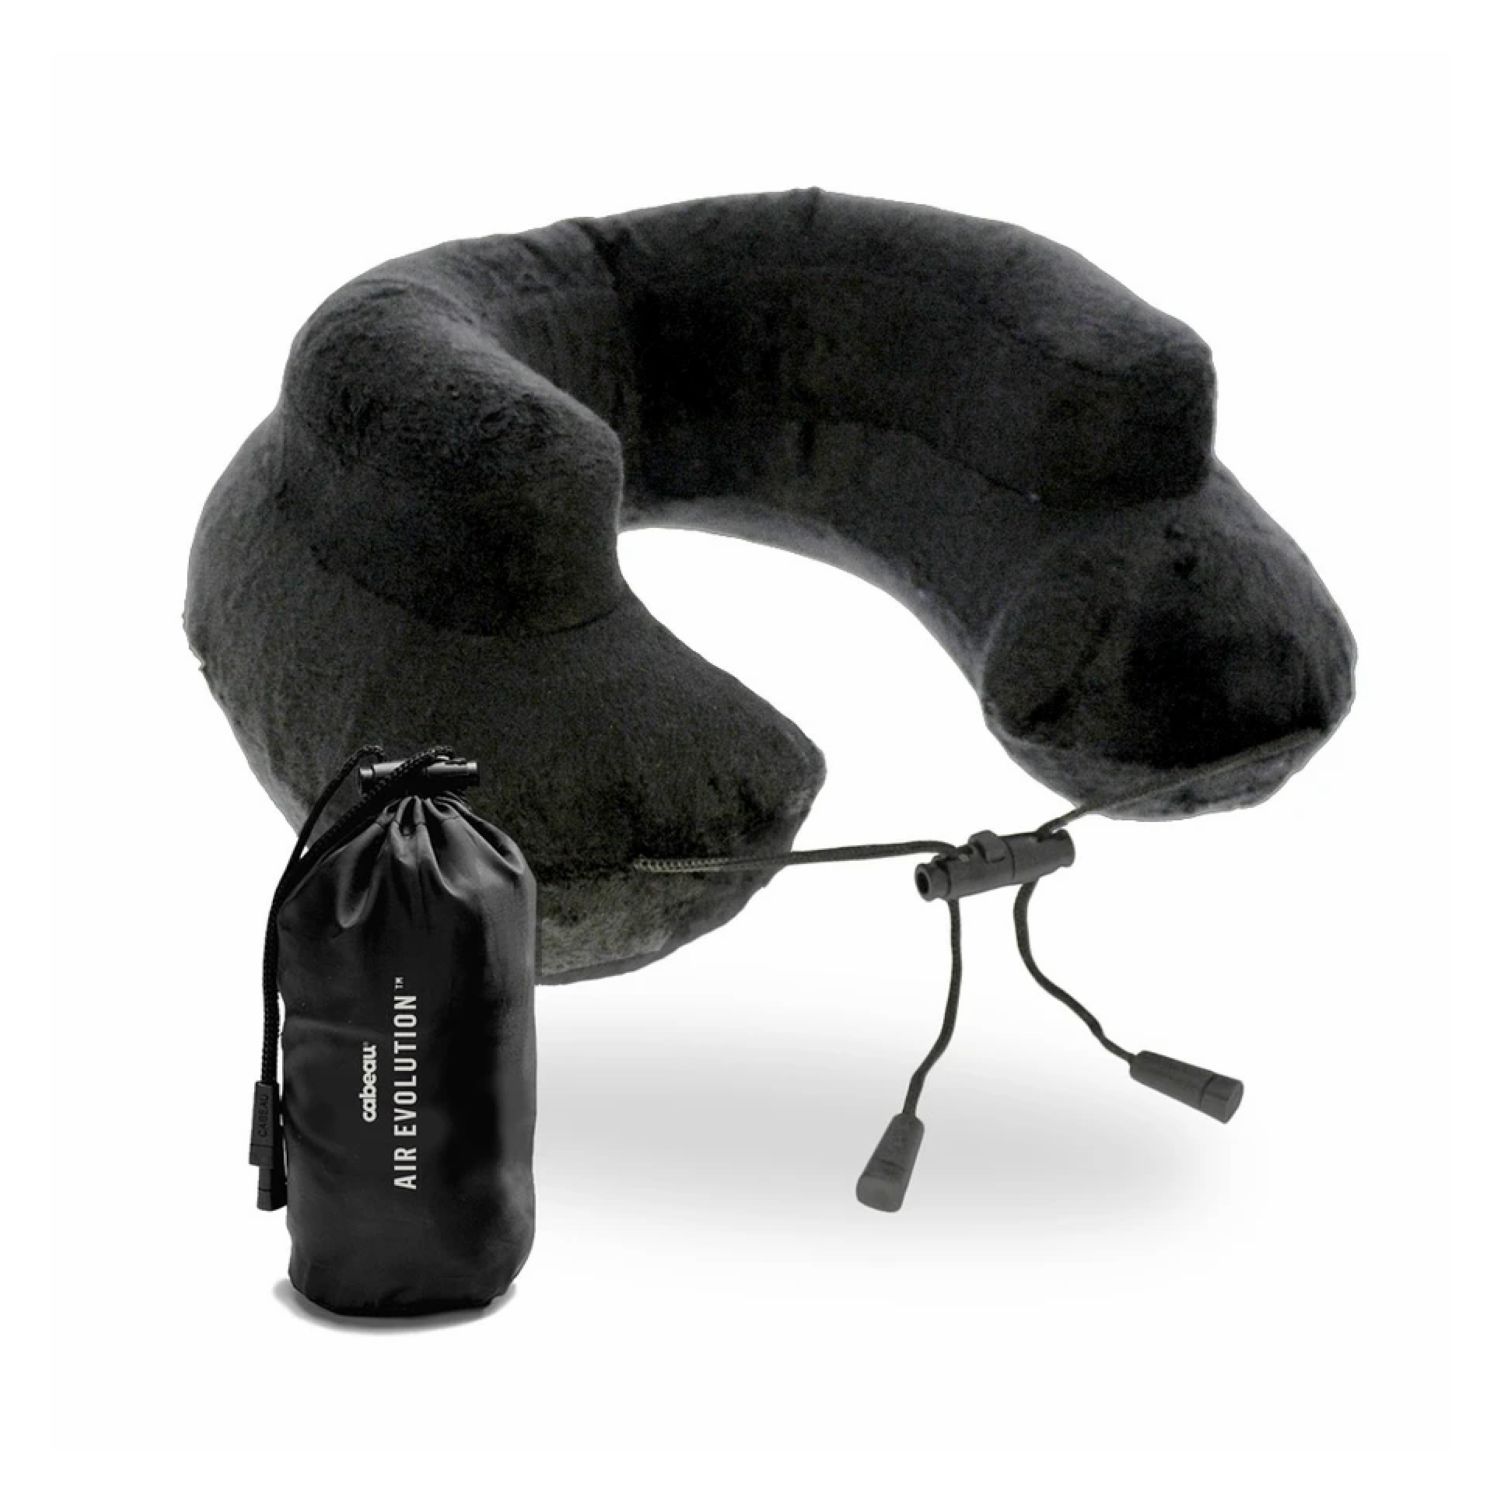 cabeau air evolution inflatable travel pillow